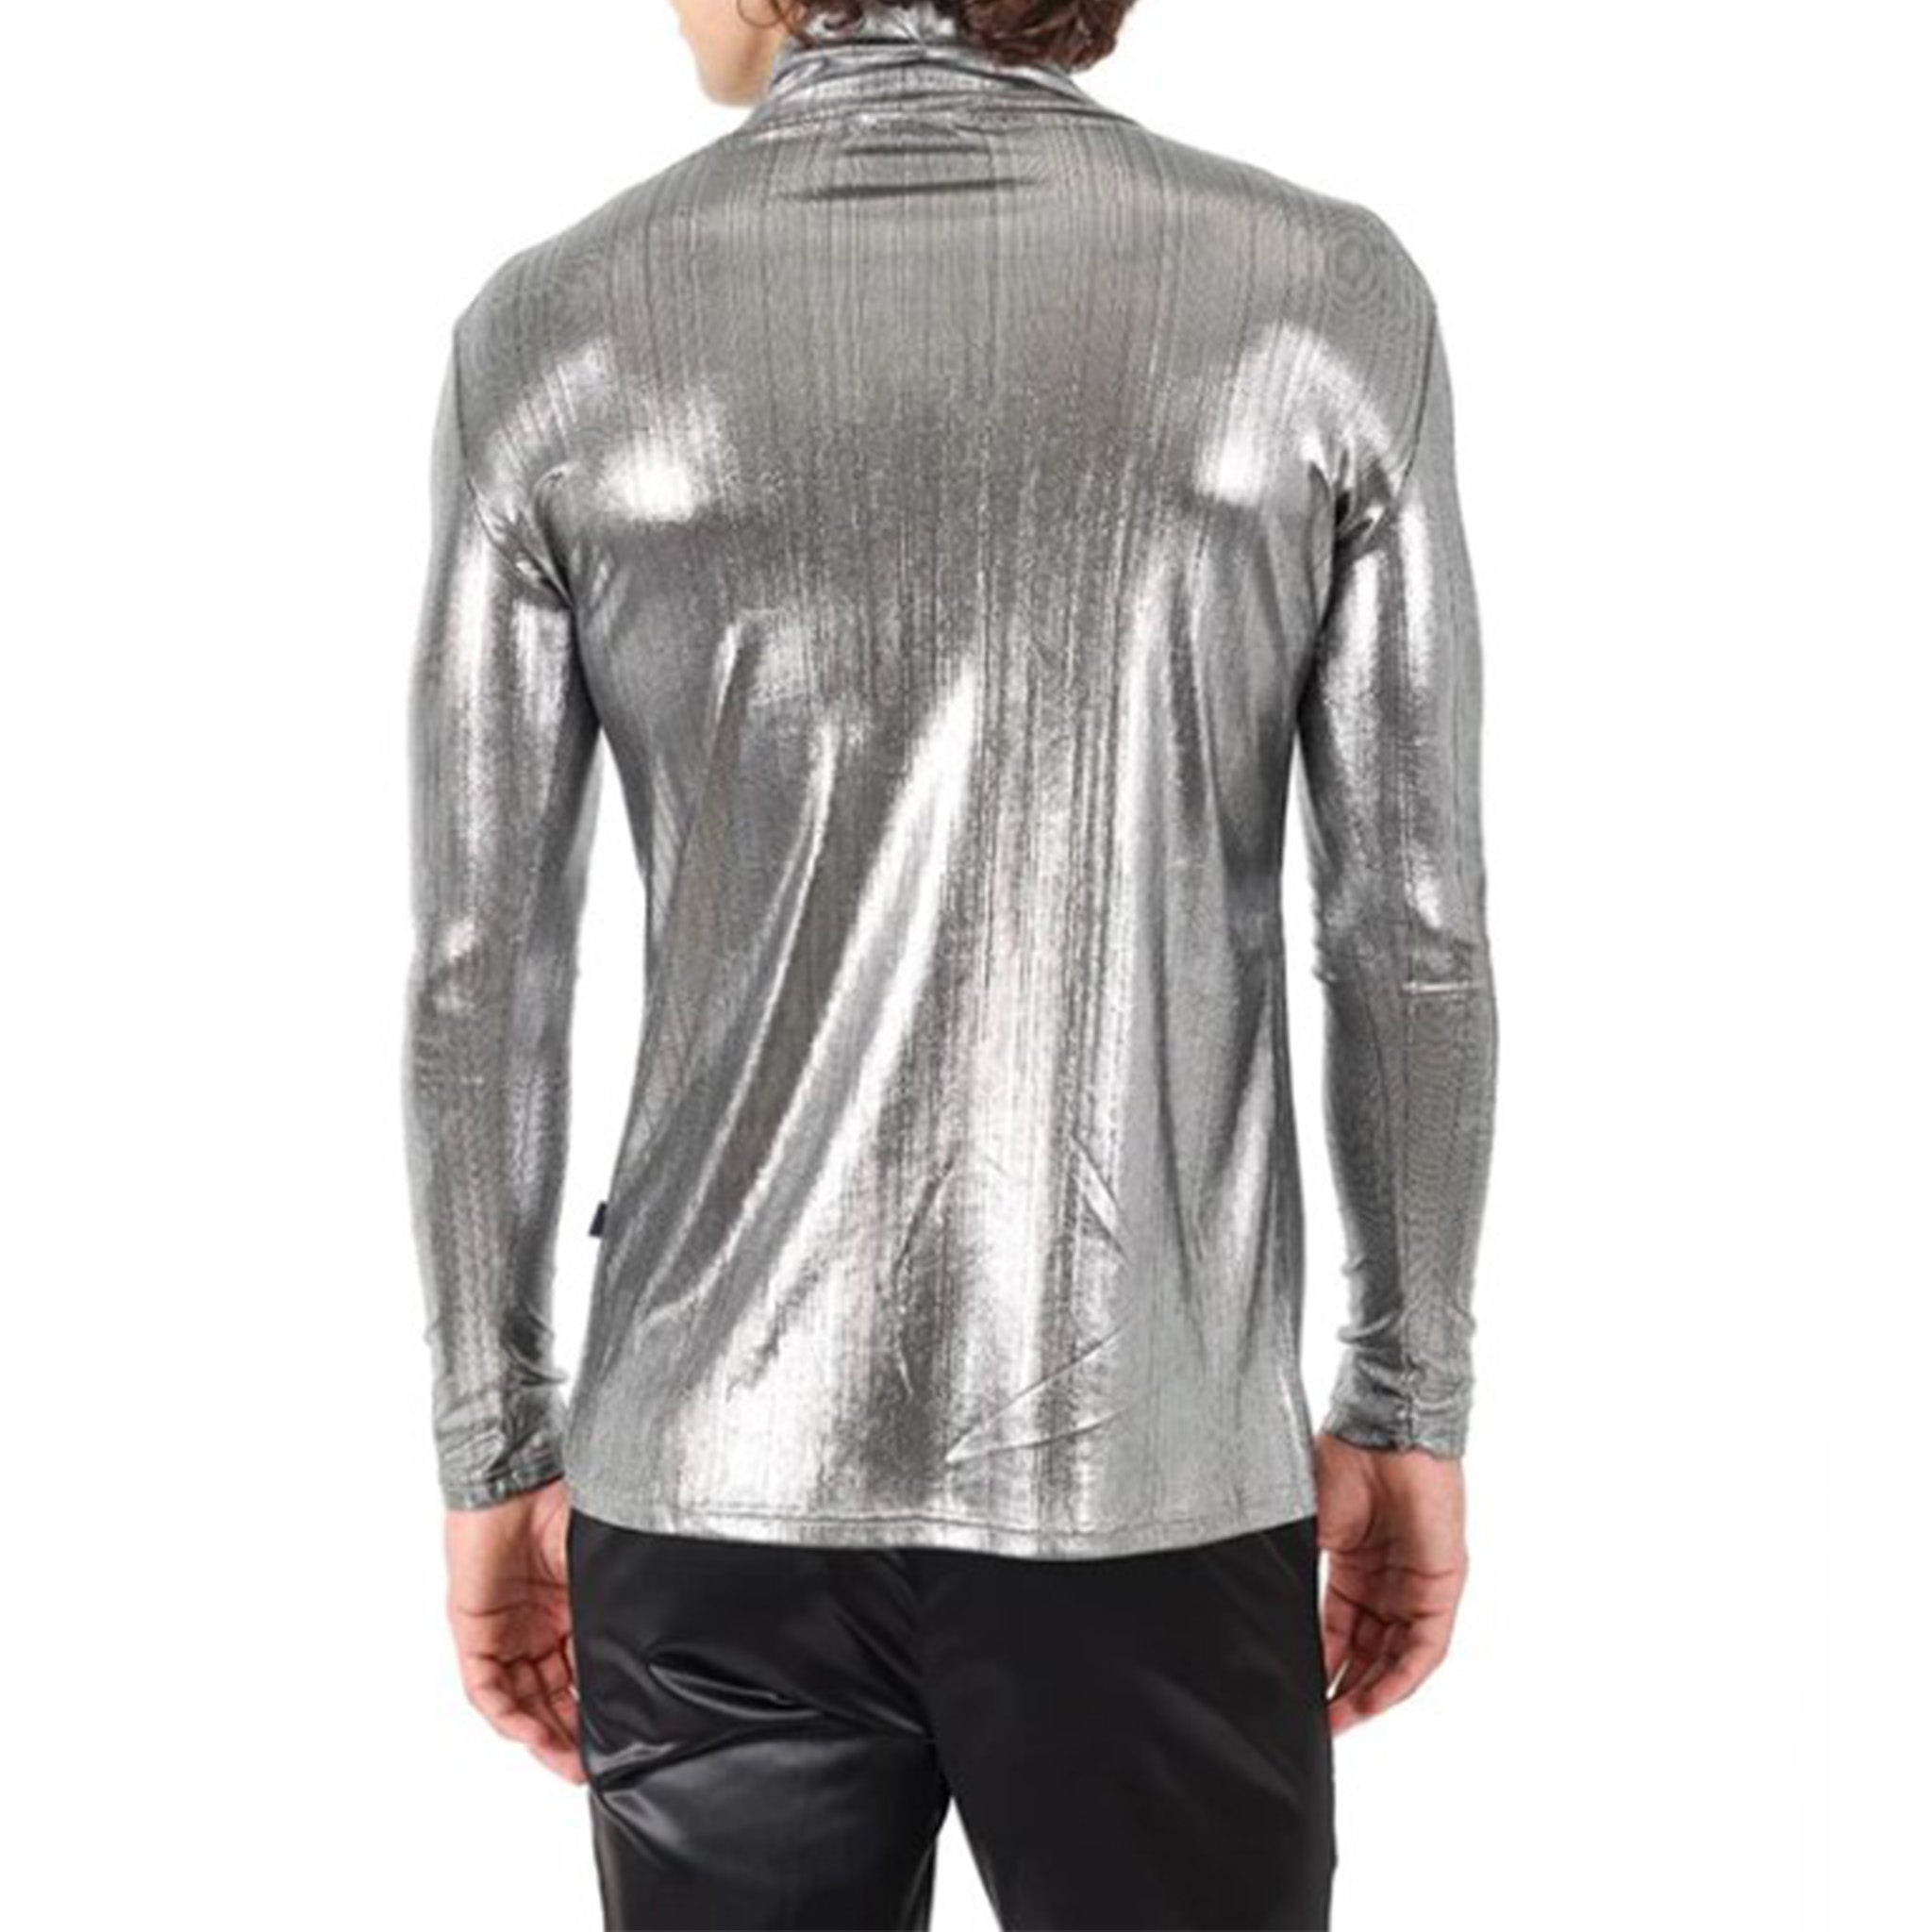 Silver Metallic Turtle Neck Shirt